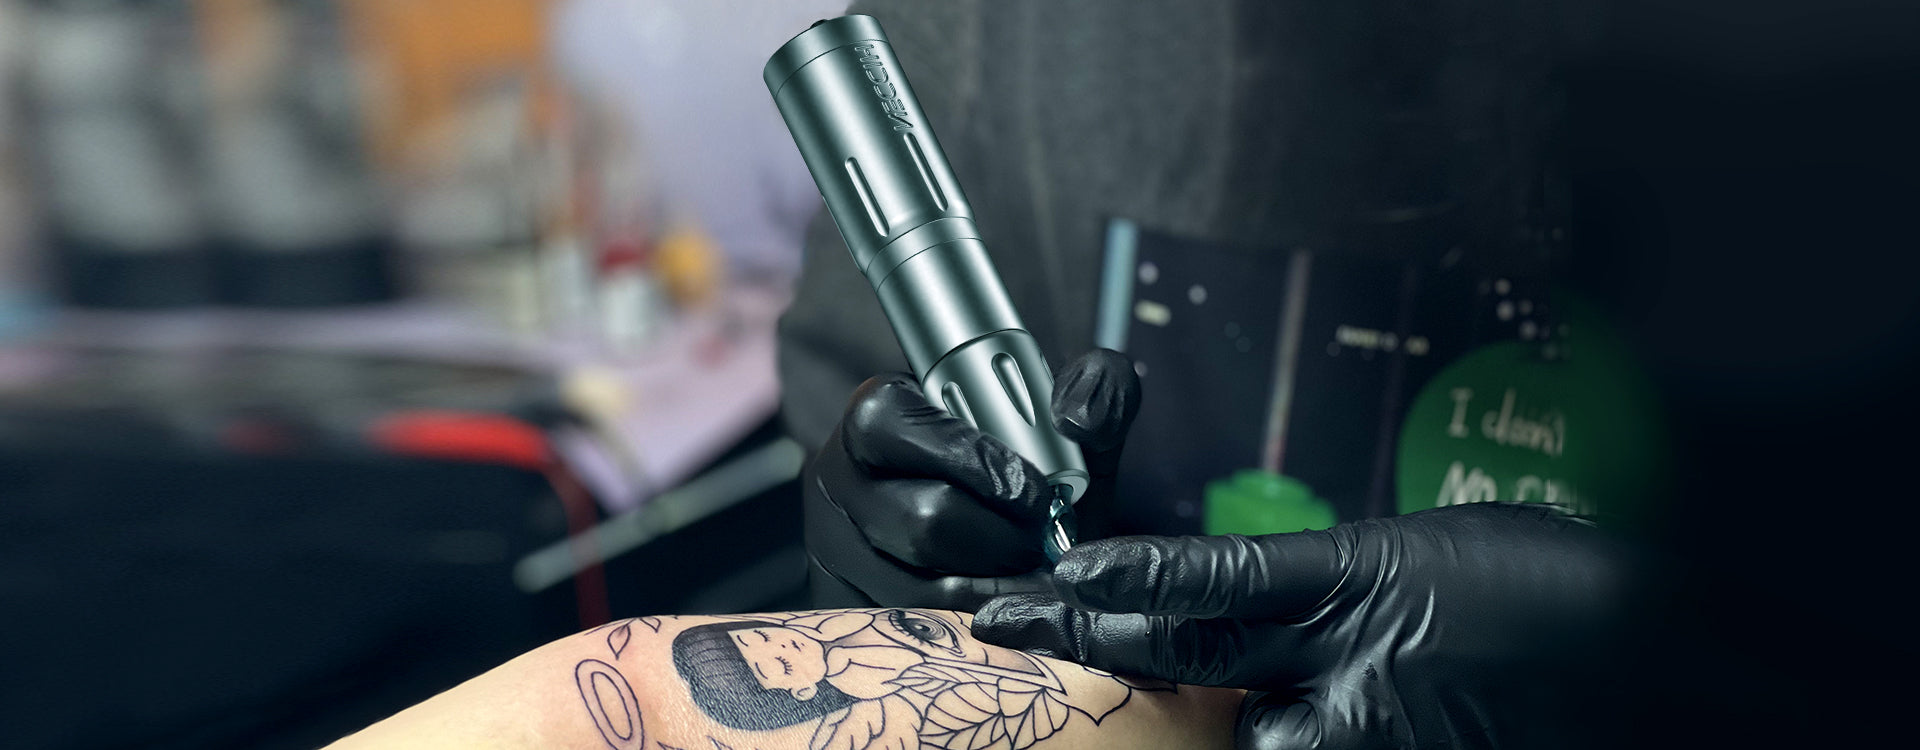 Favvosee tattoo machine pen